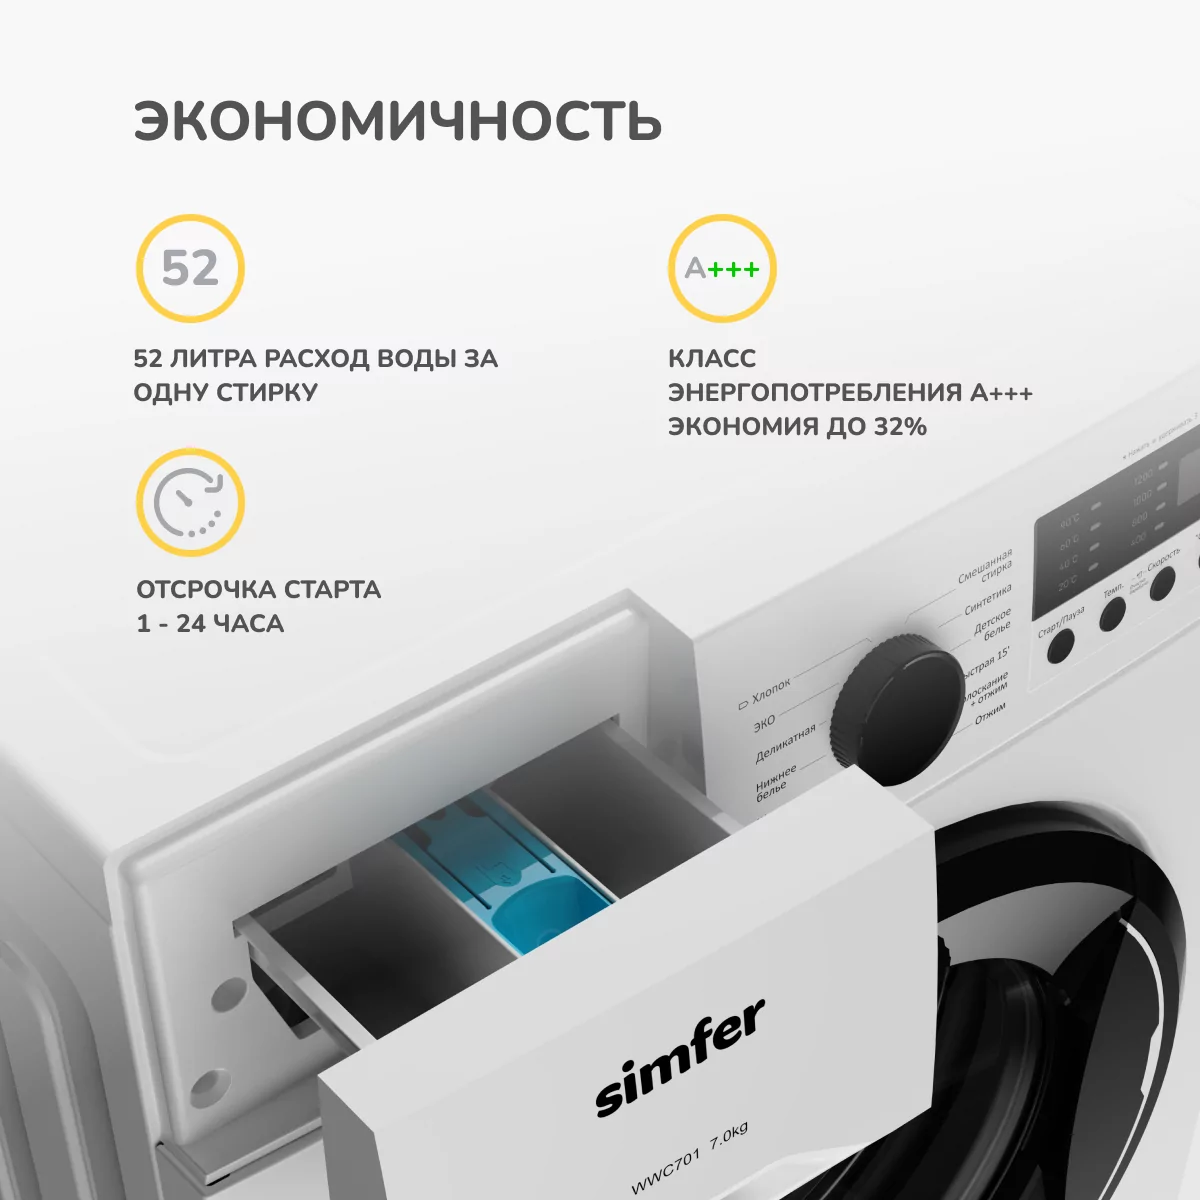 Simfer WWC701 купить Красноярск